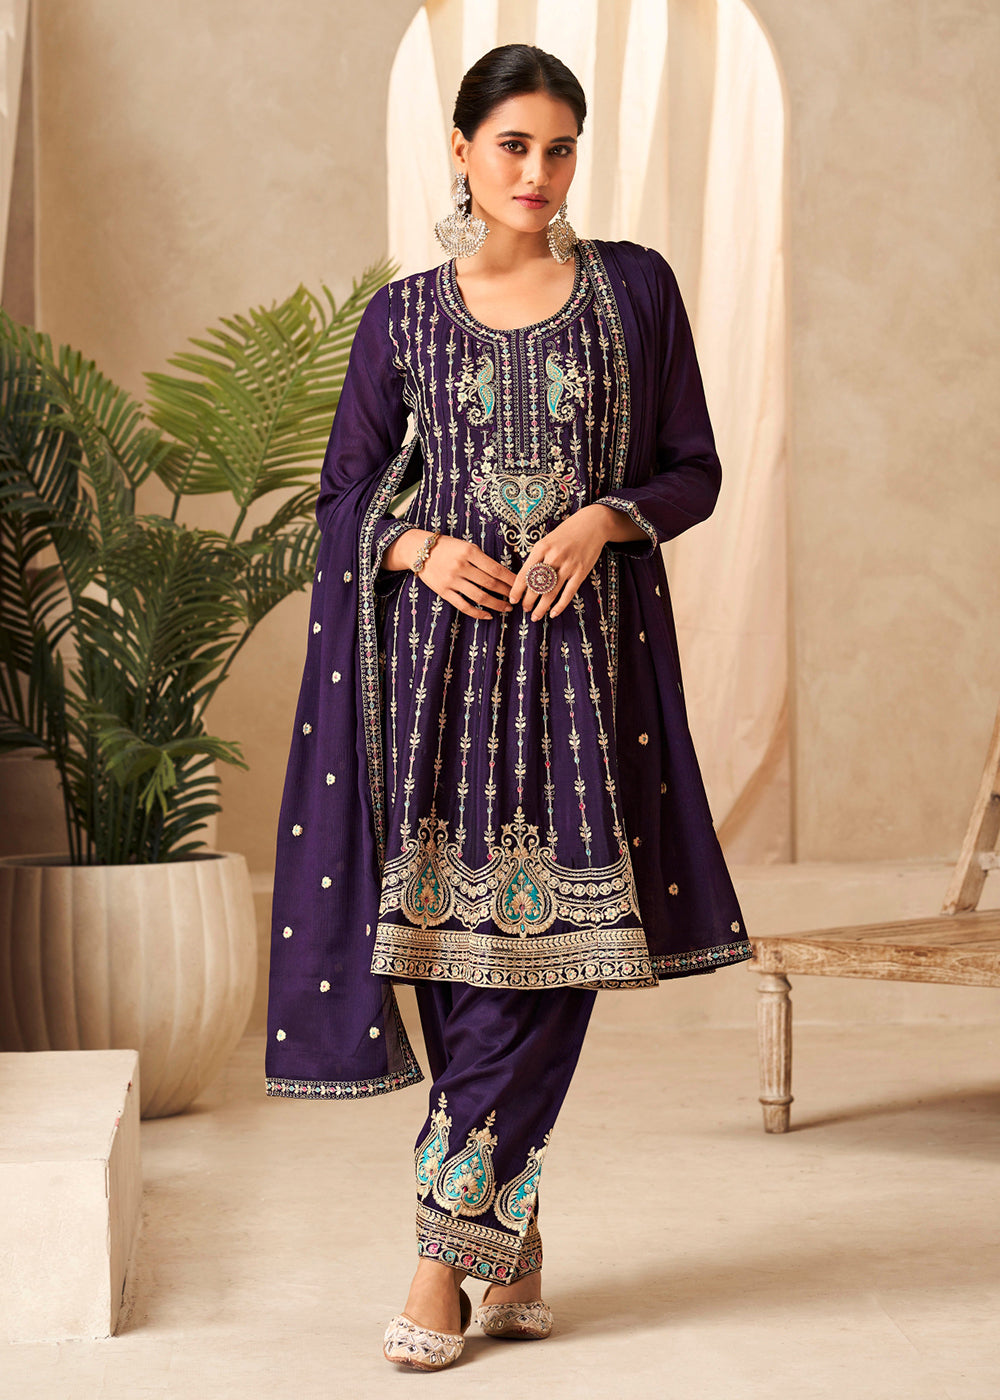 Buy Now Amethyst Purple Heavy Chinnon Wedding Festive Salwar Suit Online in USA, UK, Canada, Germany, Australia & Worldwide at Empress Clothing. 